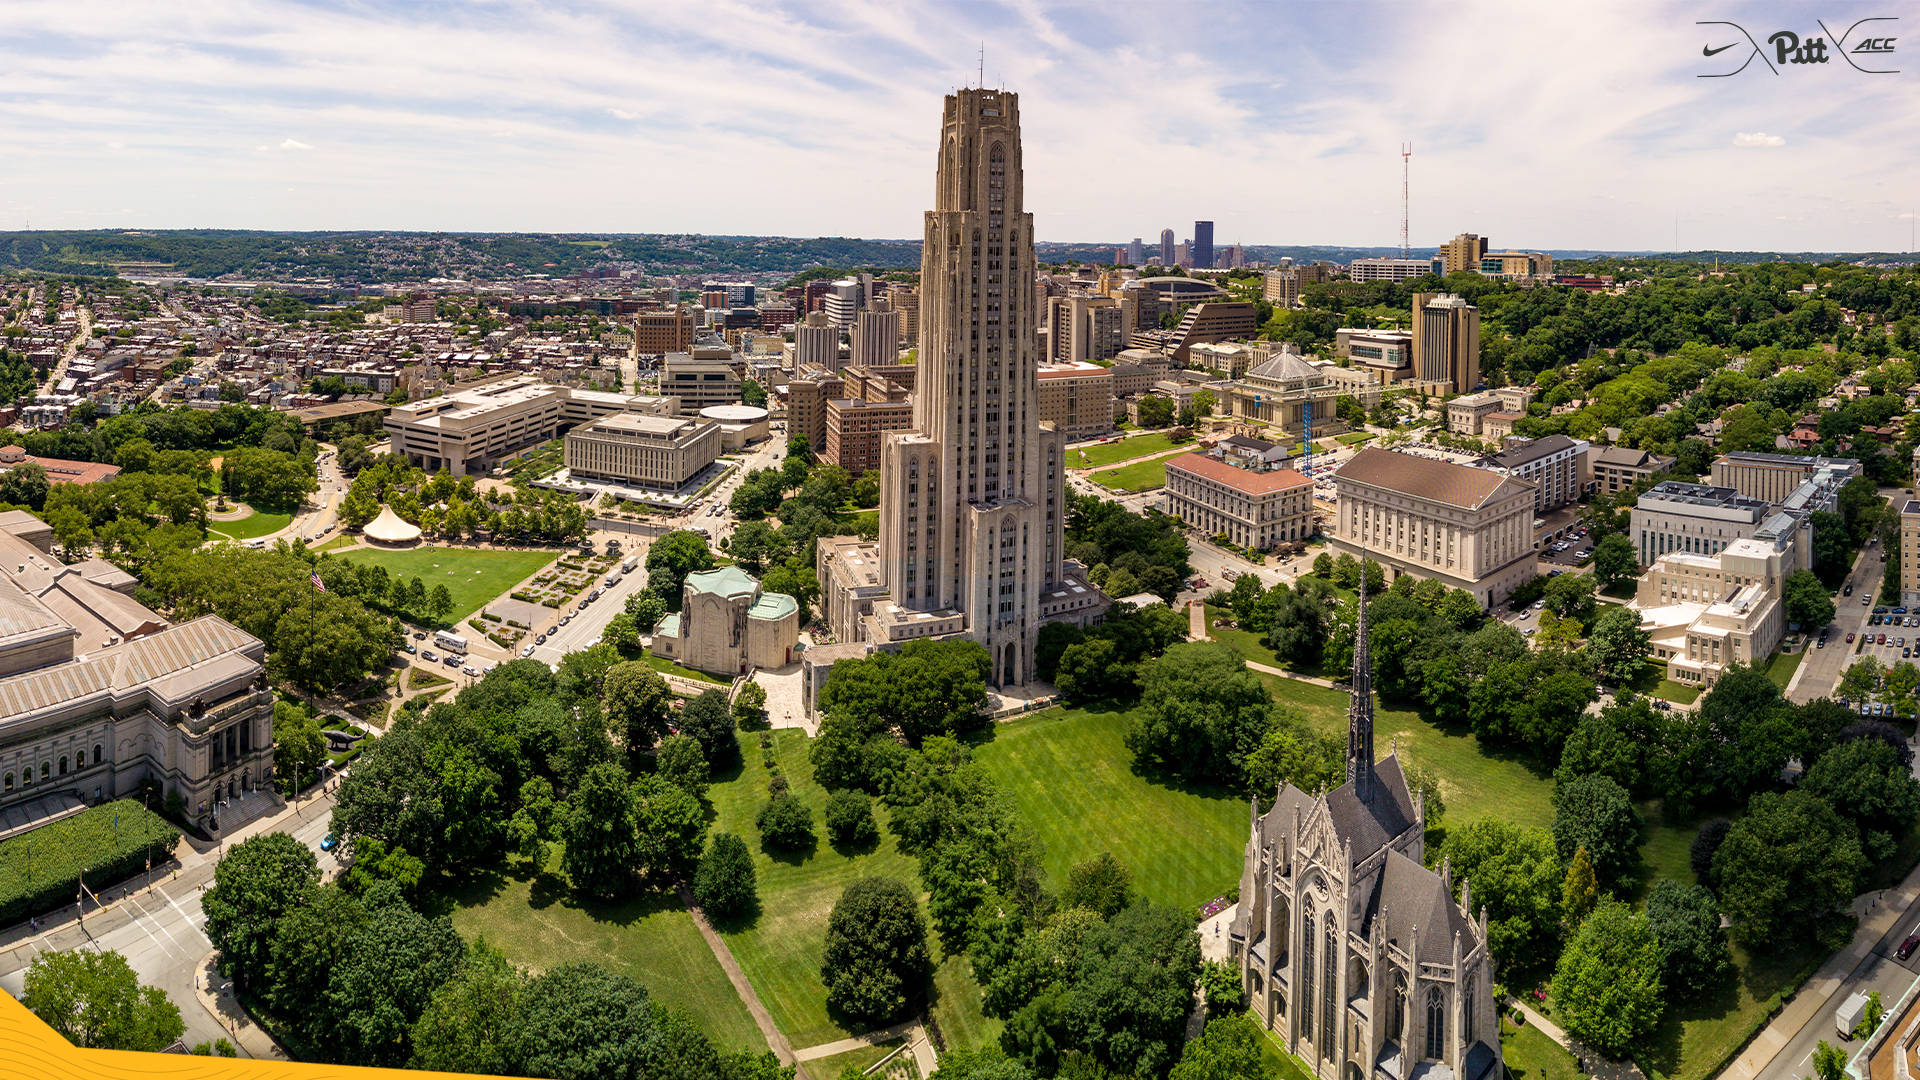 University Of Pittsburgh Aerial View Wallpaper